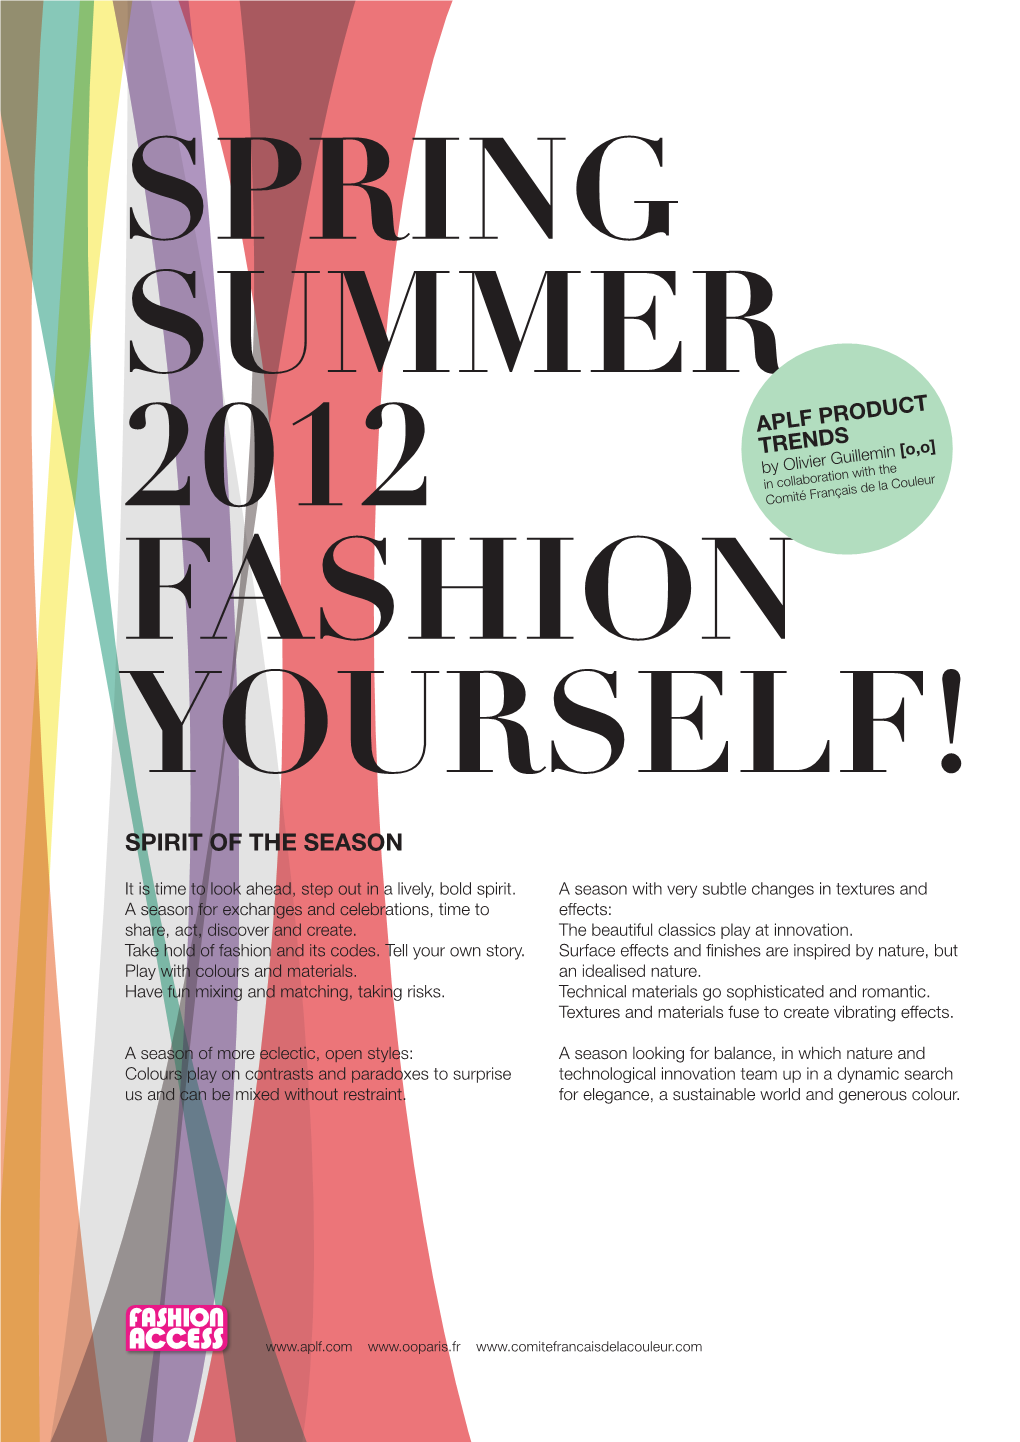 Spring Summer 2012 Fashion Yourself!